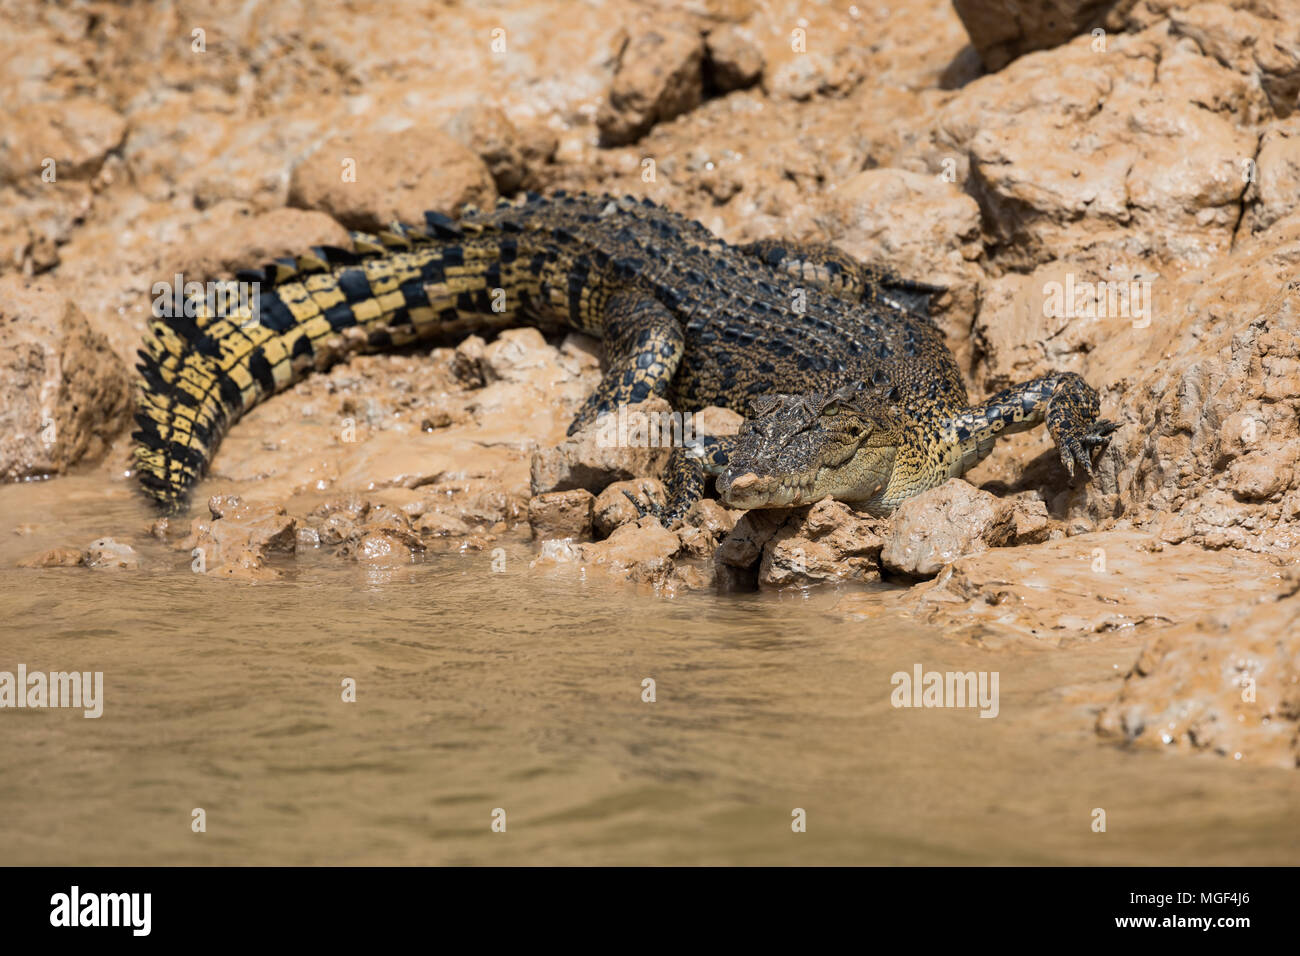 An crocodile (Crocodylus porosus) on the muddy bank of the Daly River in Australia Stock Photo - Alamy